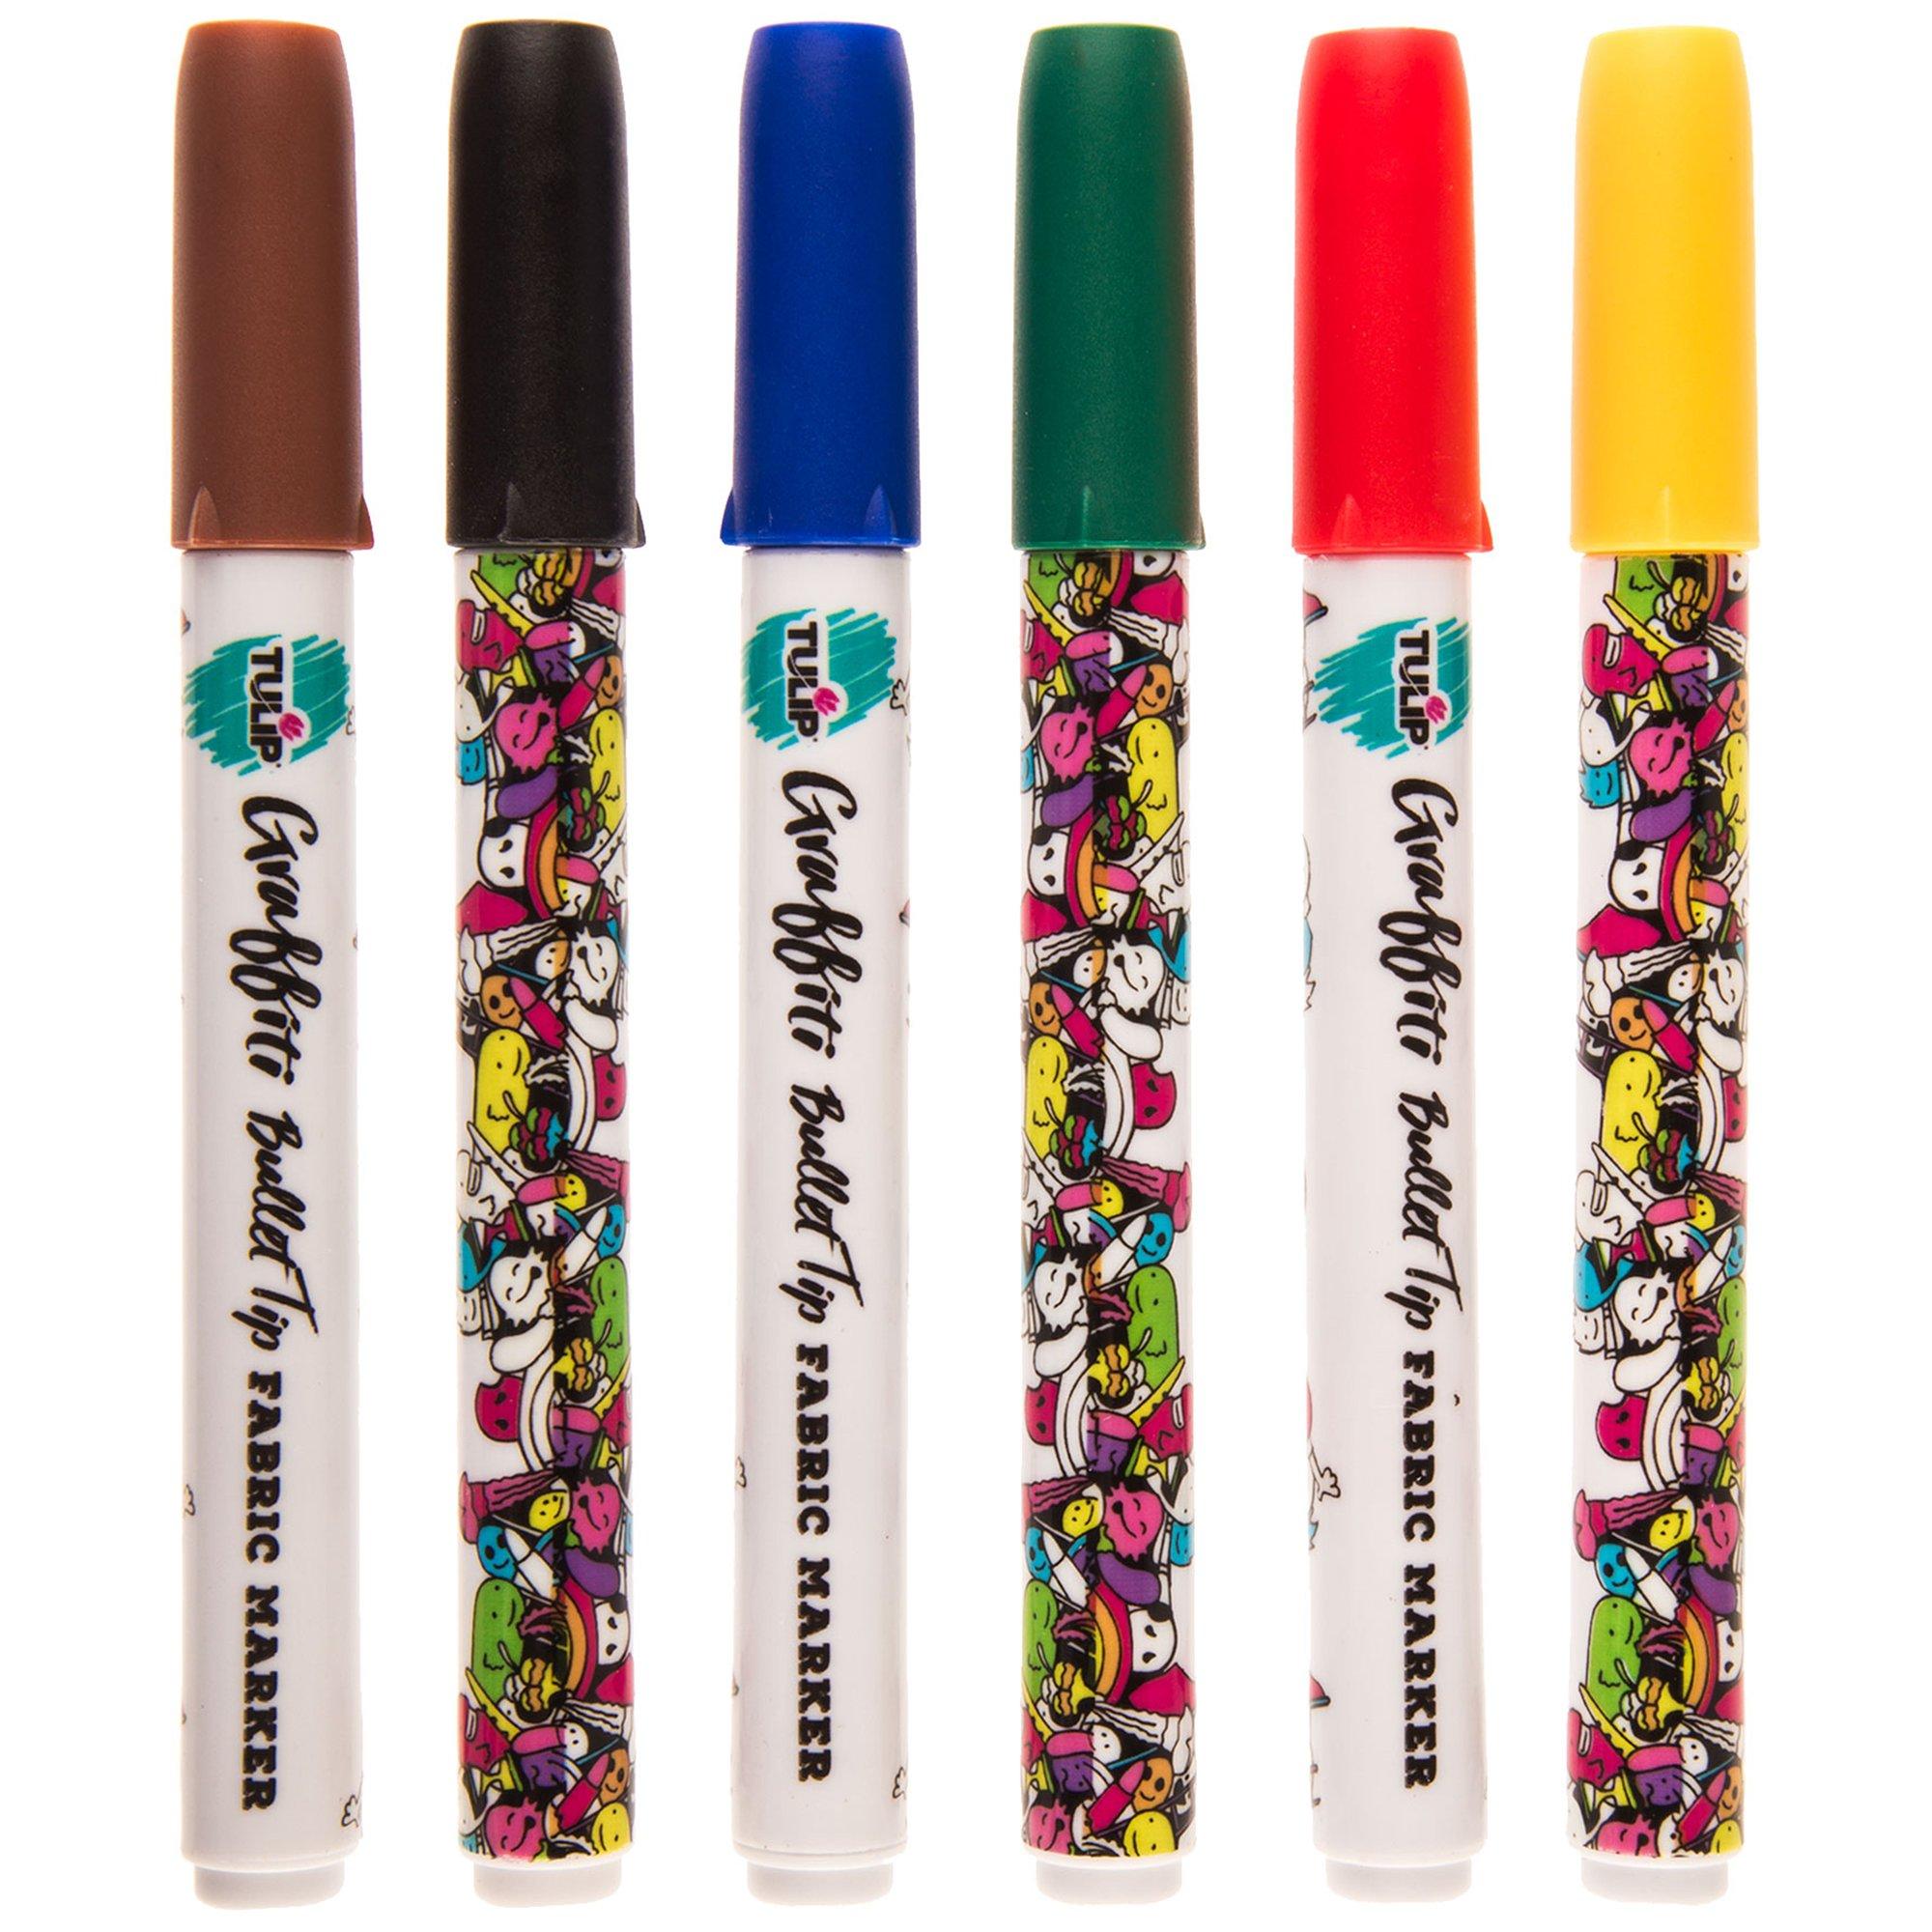  TSYFM Double Tip Markers, 80 Colors Fabric Graffiti